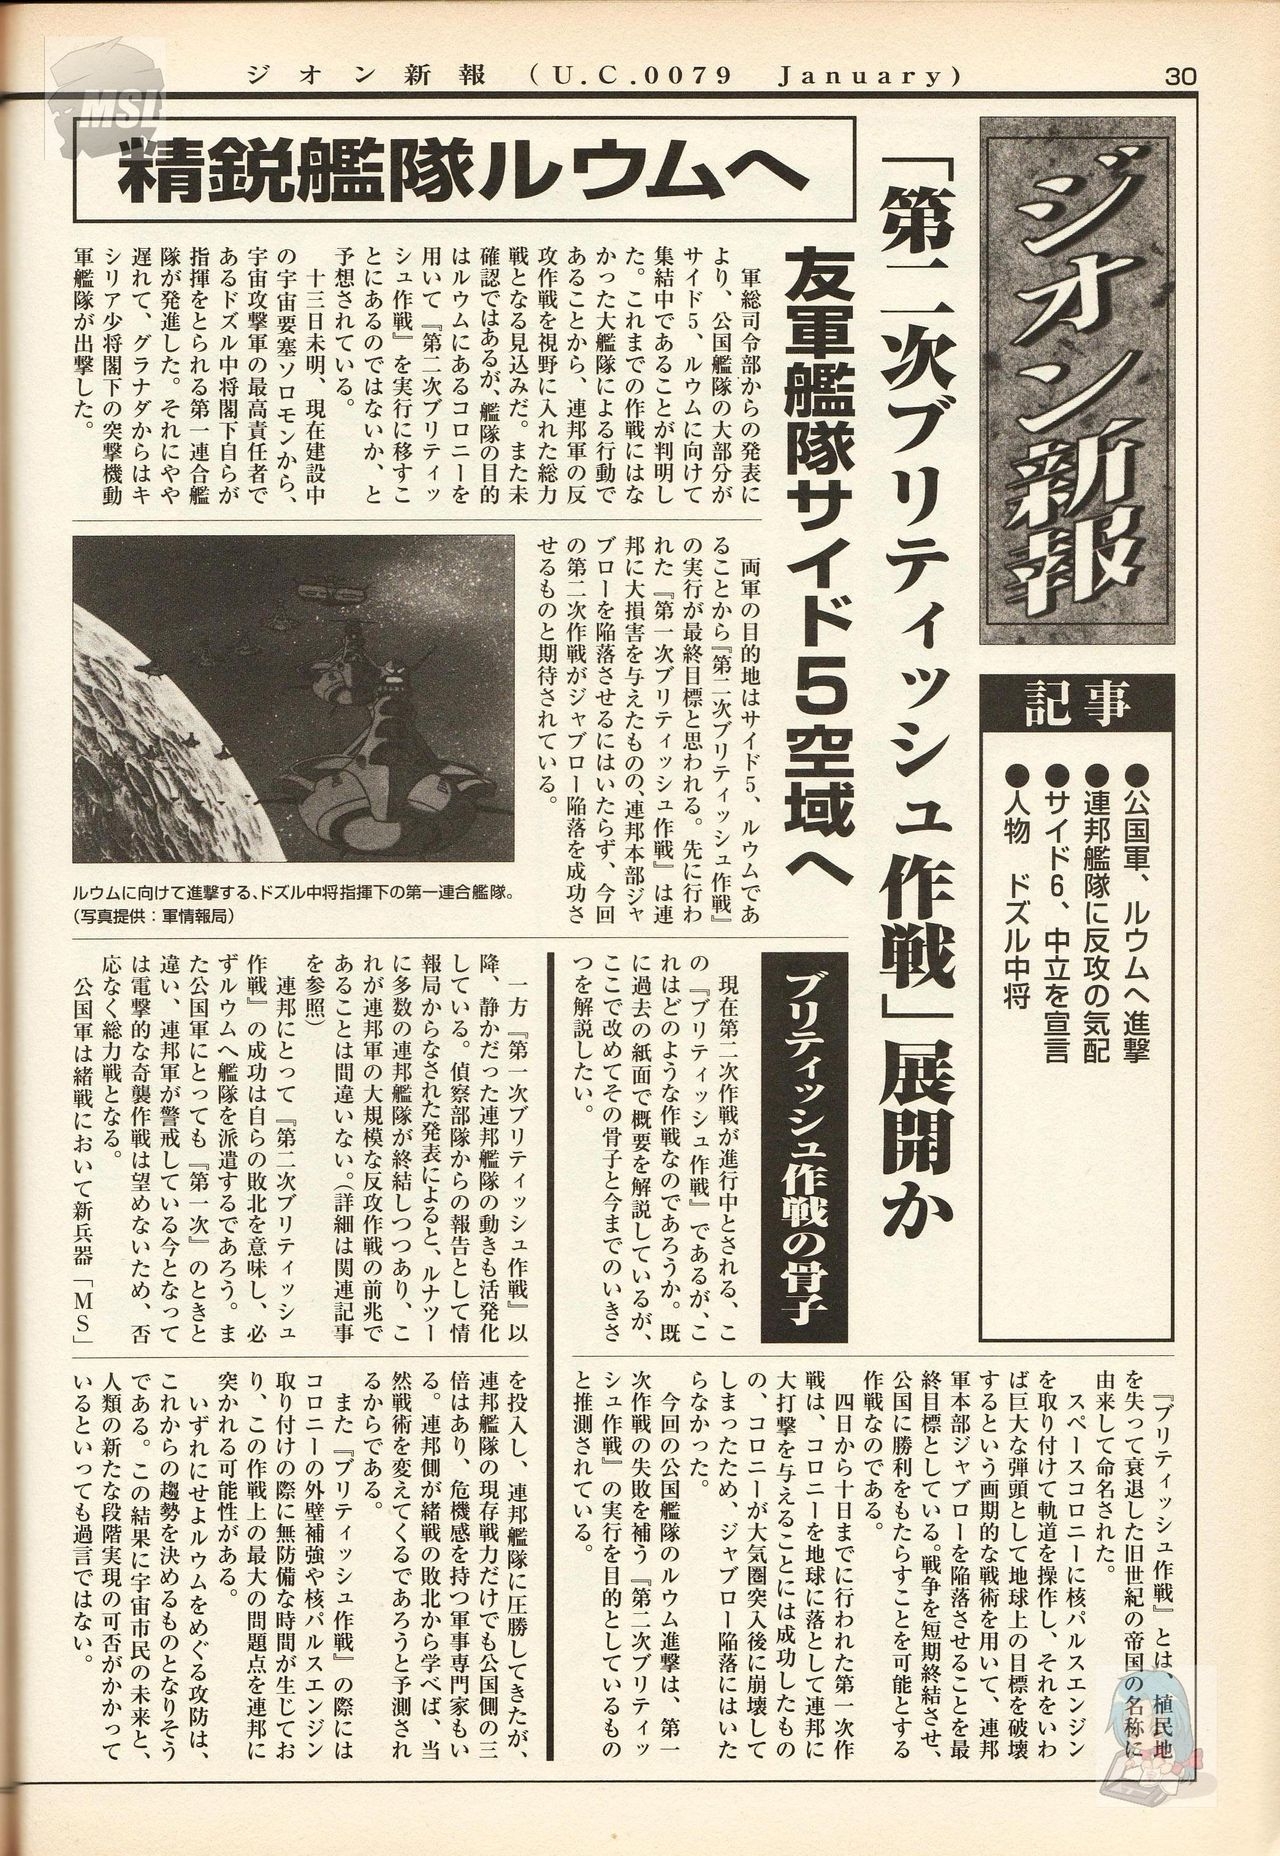 Mobile Suit Gundam - Zeon - Classified Records 33